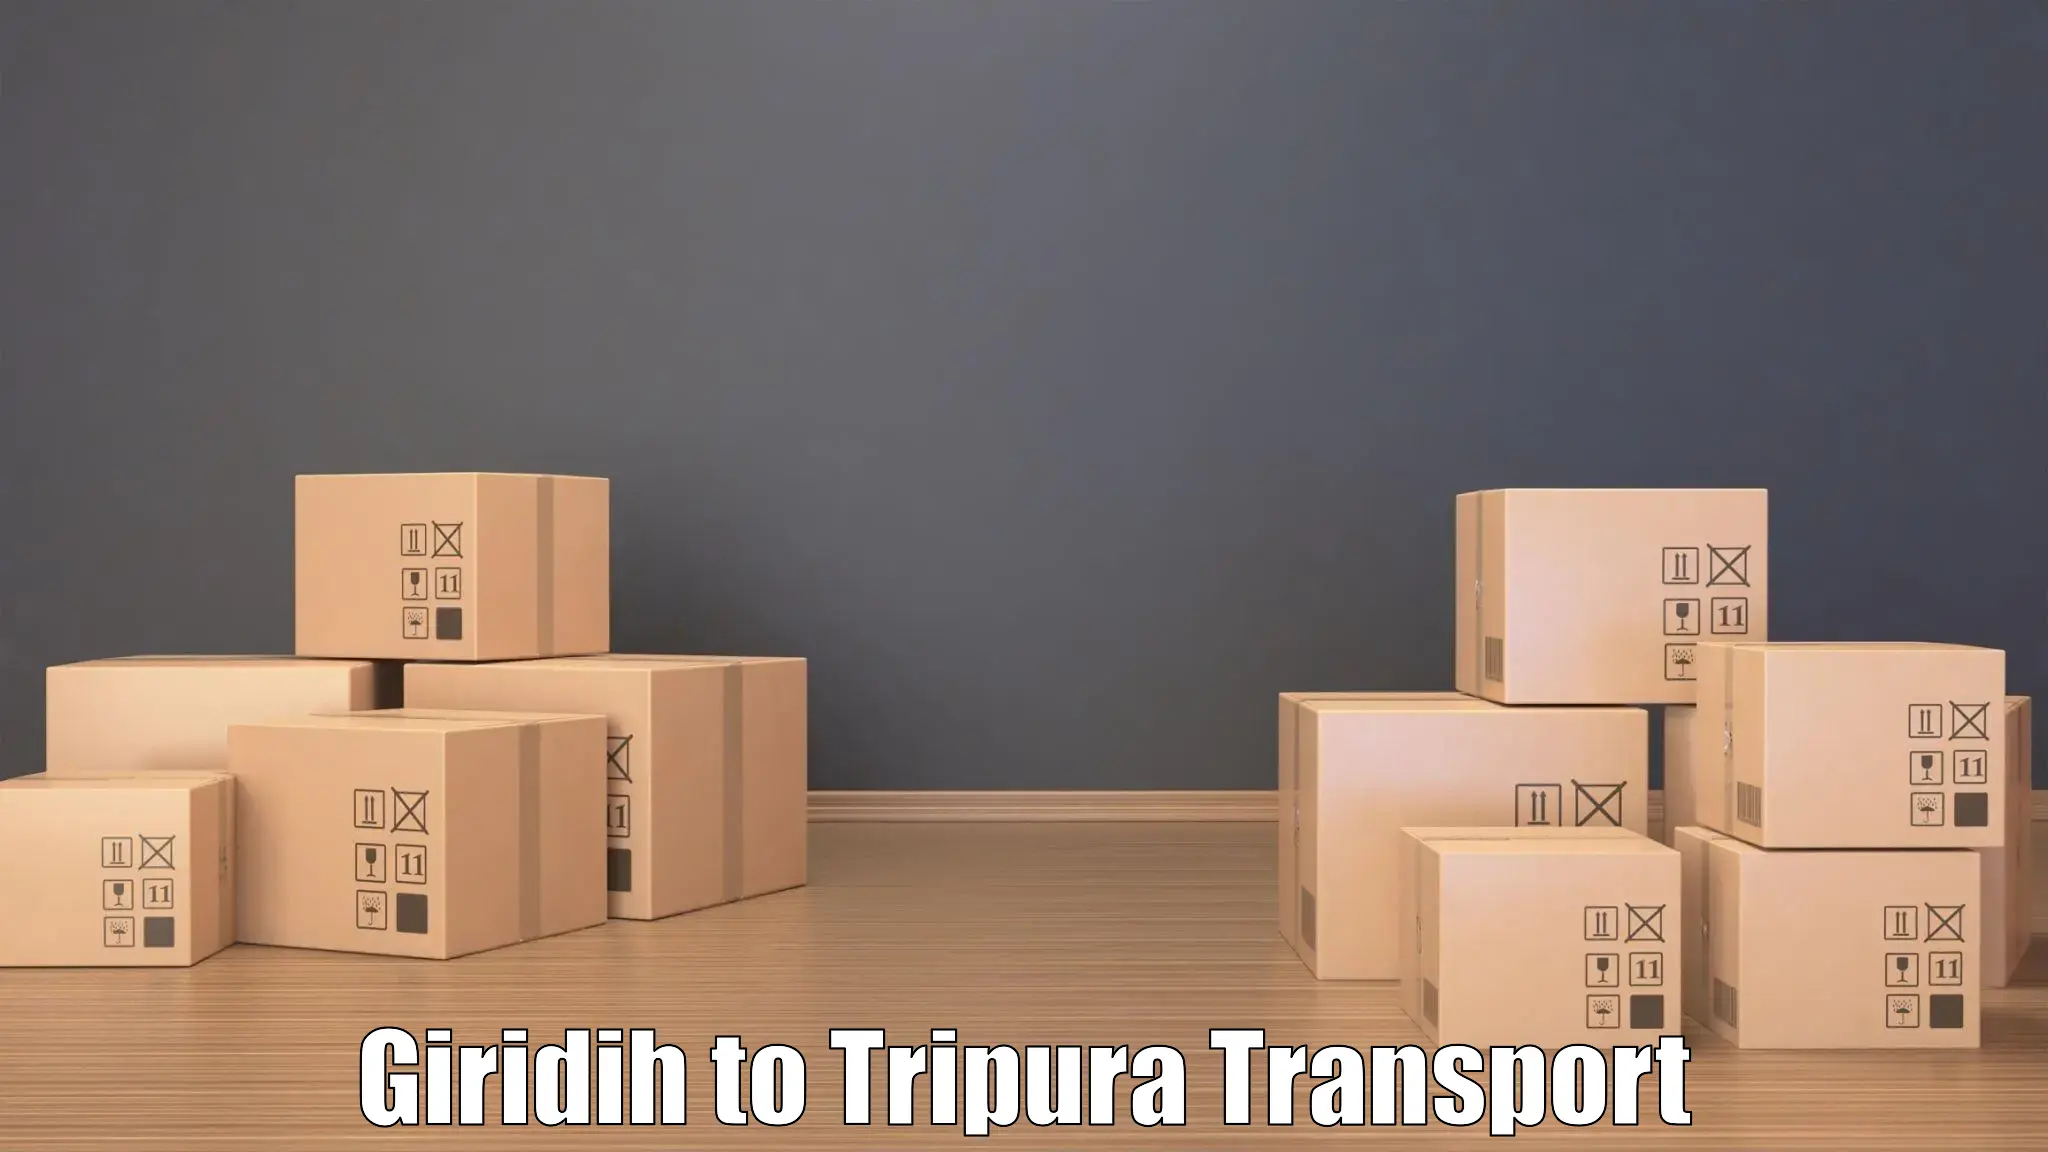 Daily transport service Giridih to Agartala